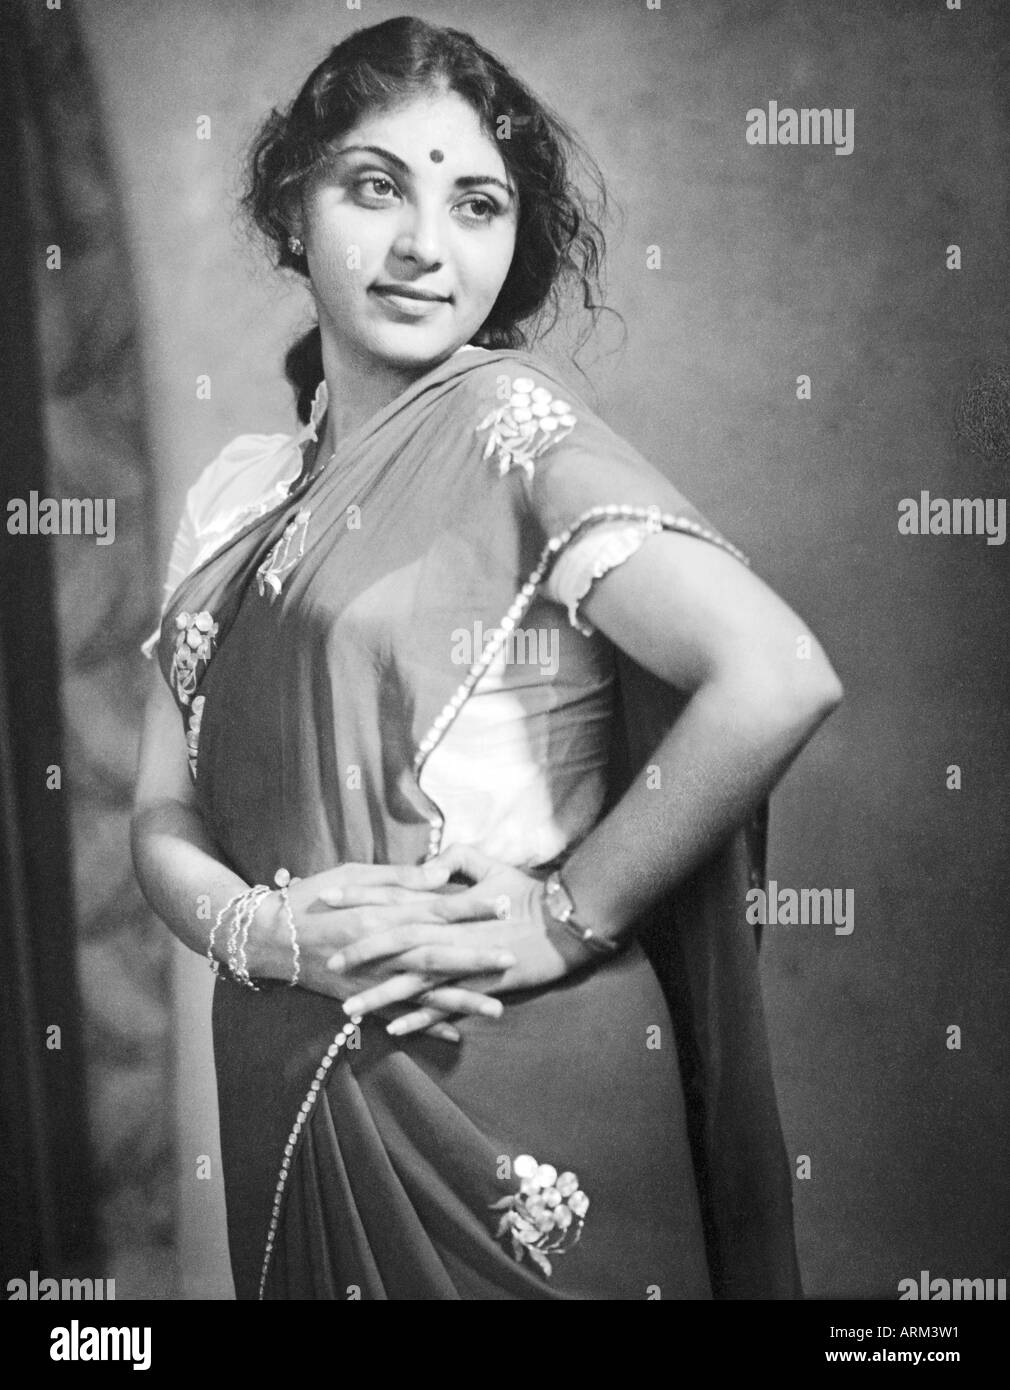 old vintage 1940s photo of Kamala Kotnis an Indian bollywood hindi movie film star actress with bindi on forehead India 1940s Stock Photo